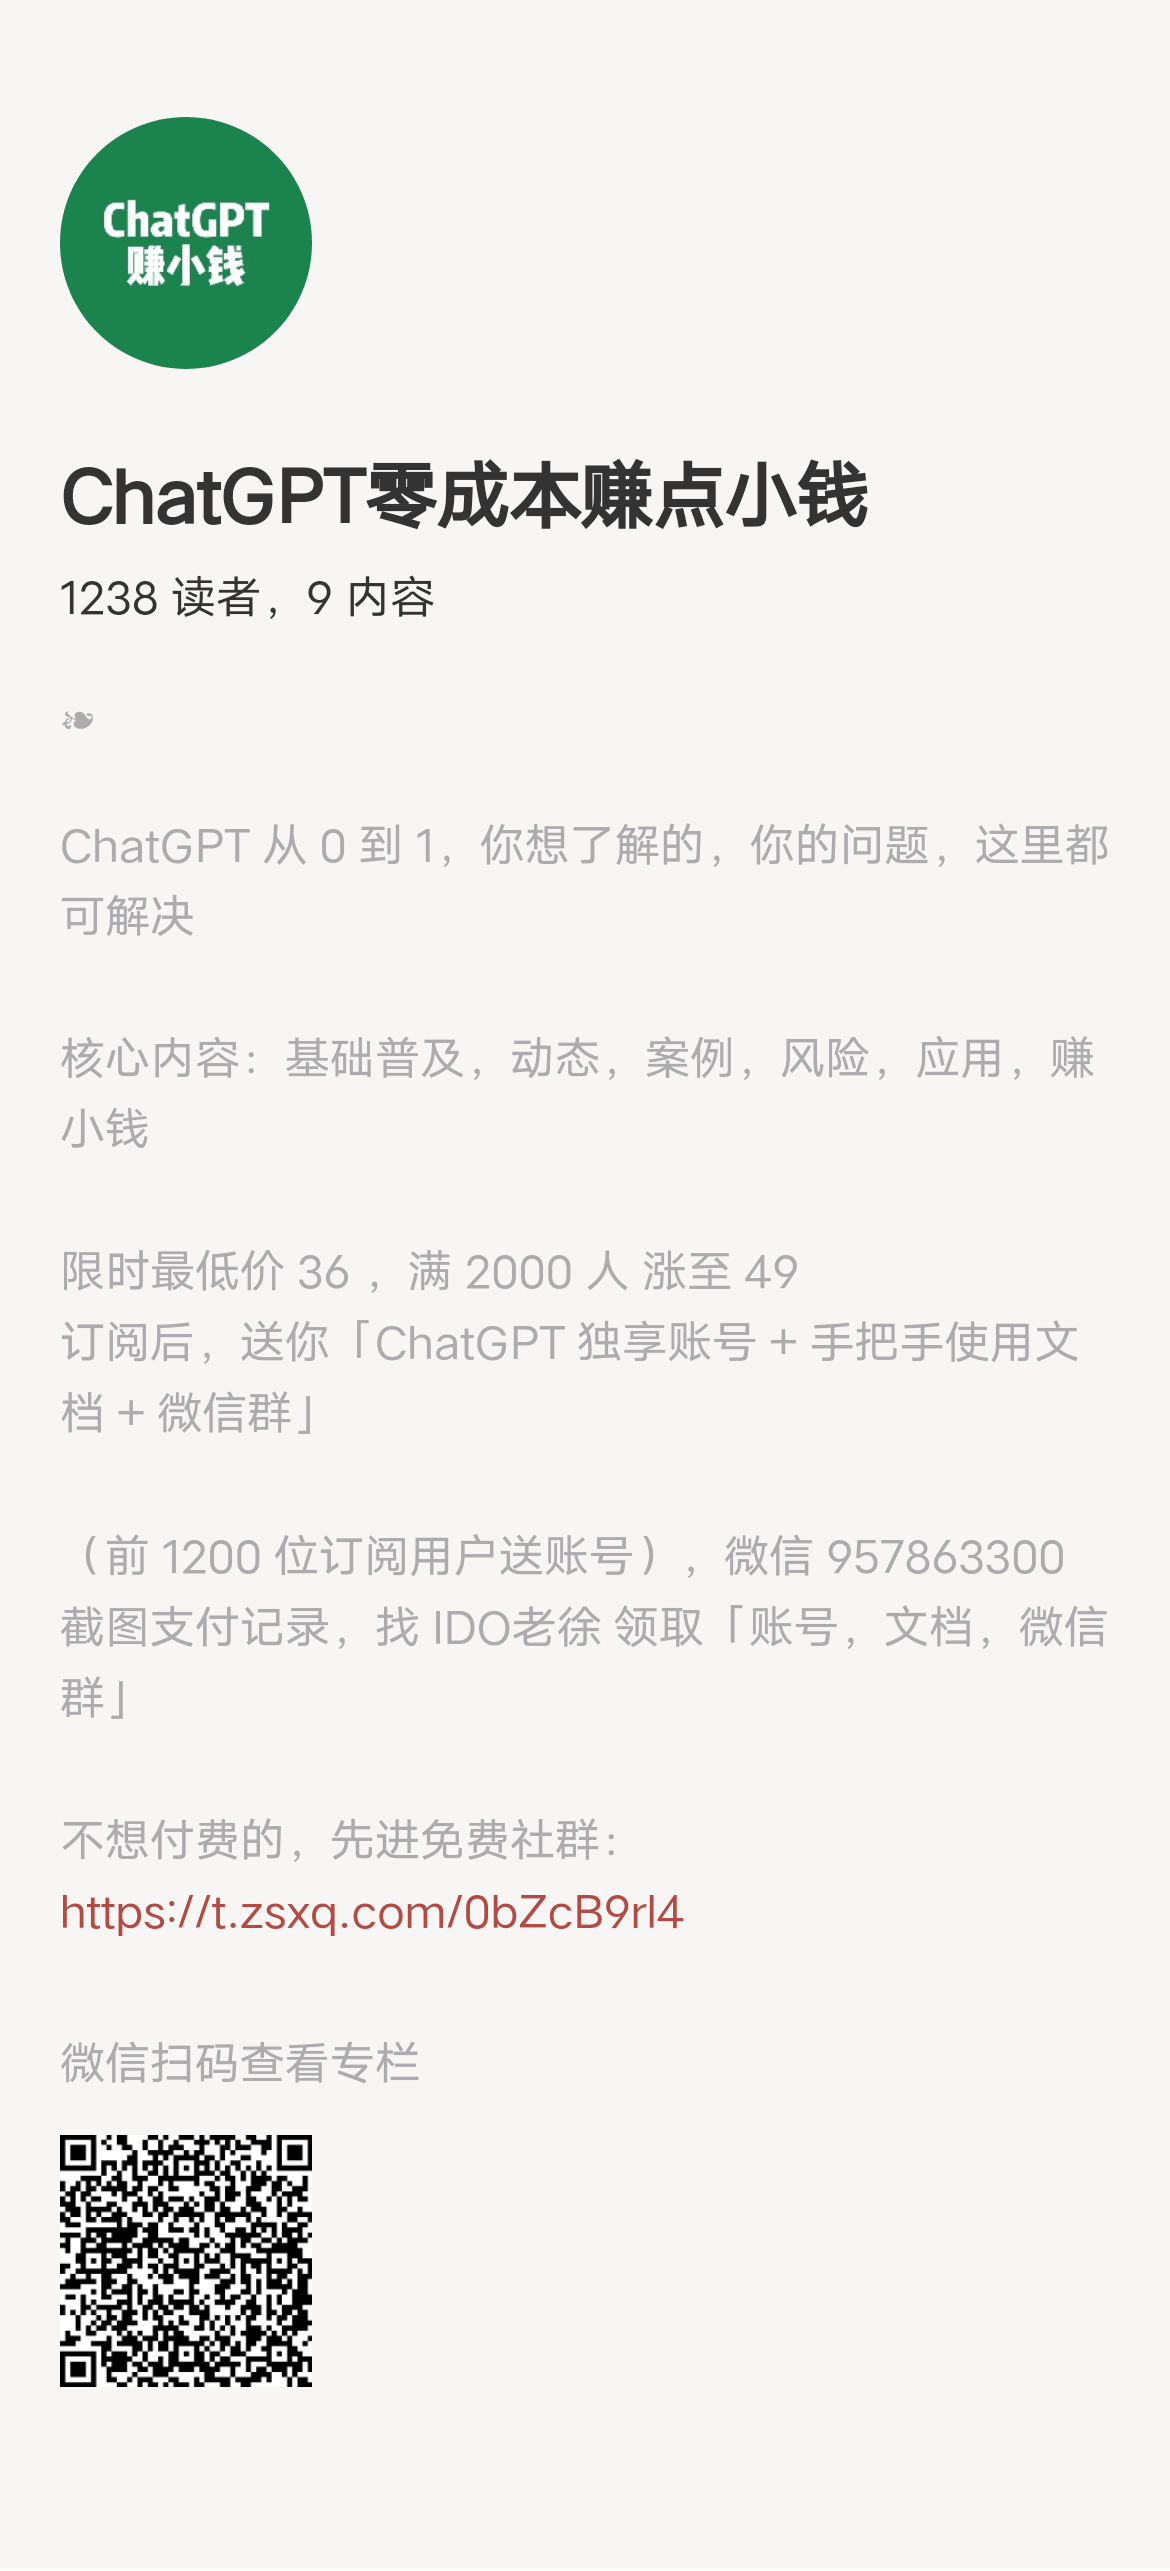 ChatGPT,火爆,怎么,利用,零,成本,赚点,小钱, . ChatGPT火爆，怎么利用ChatGPT零成本赚点小钱?